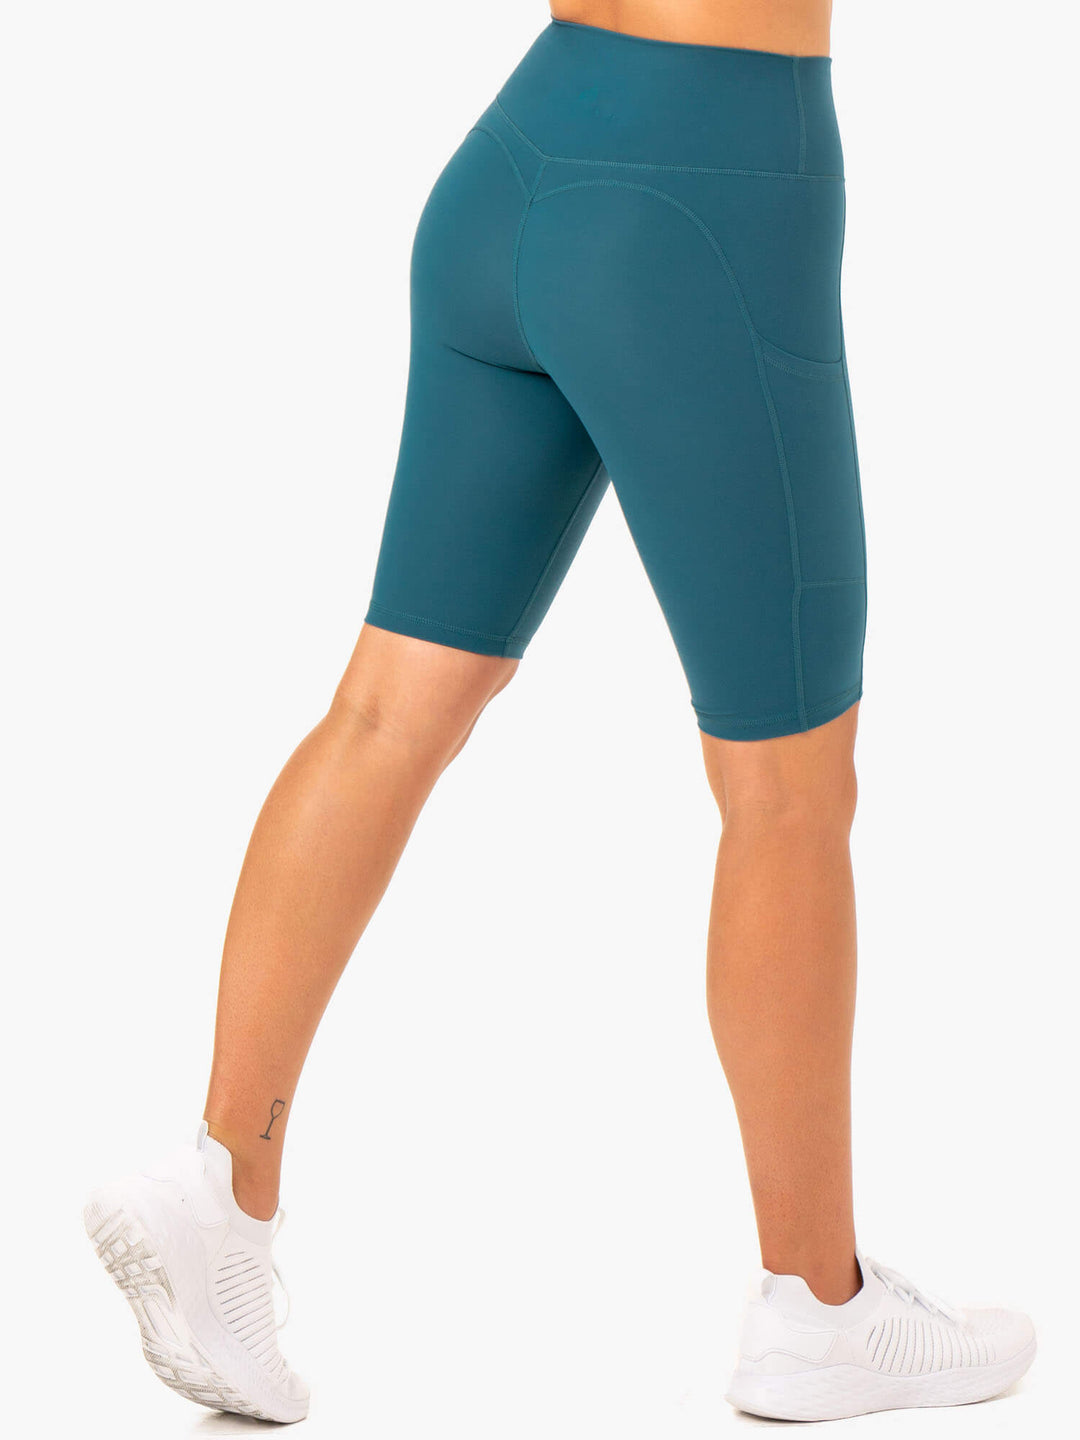 Reset High Waisted Pocket Bike Shorts - Teal Clothing Ryderwear 